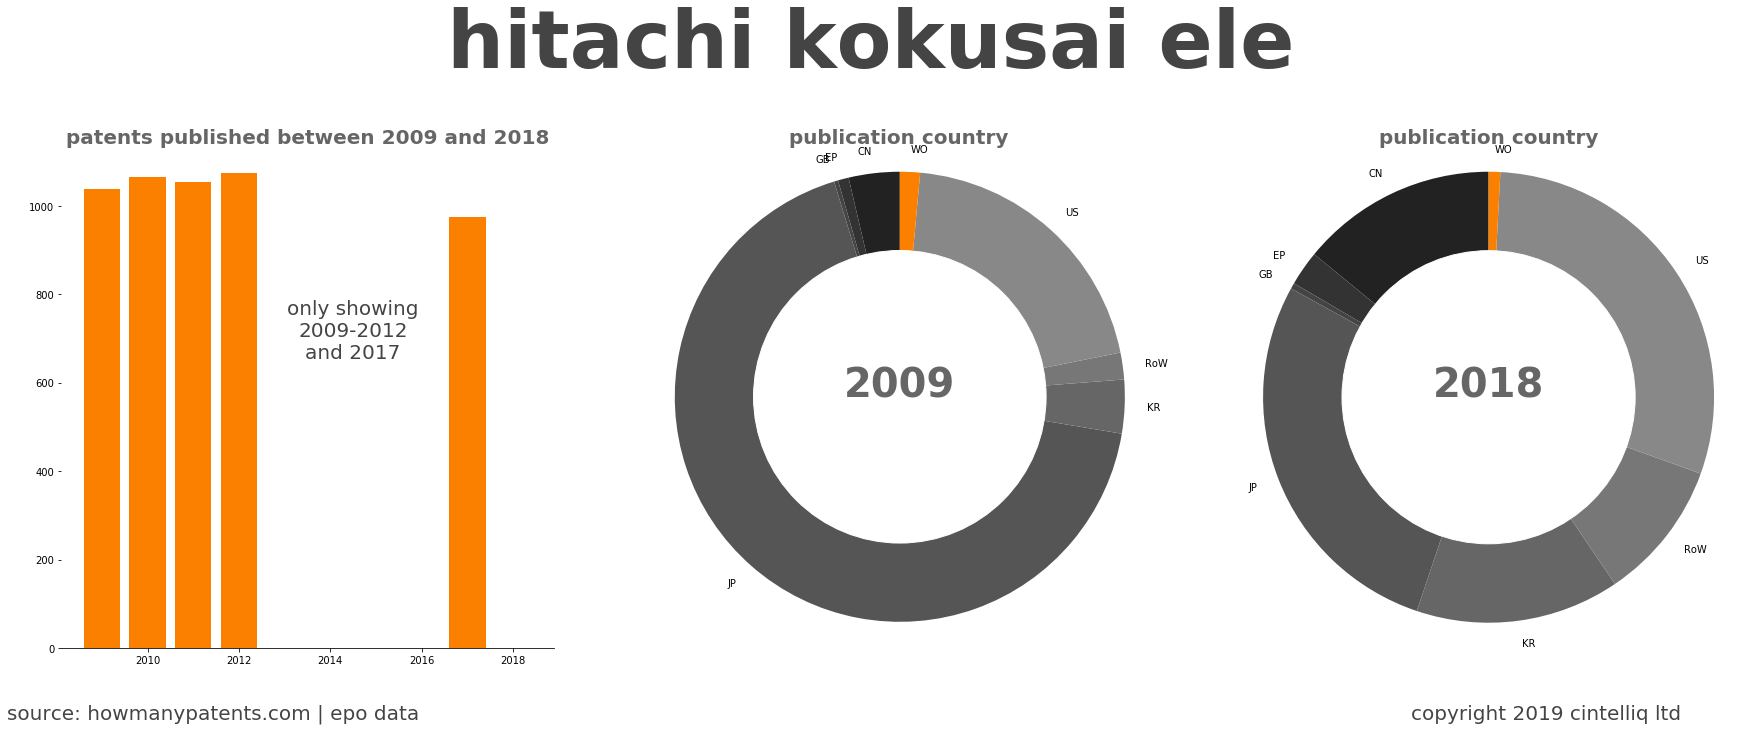 summary of patents for Hitachi Kokusai Ele